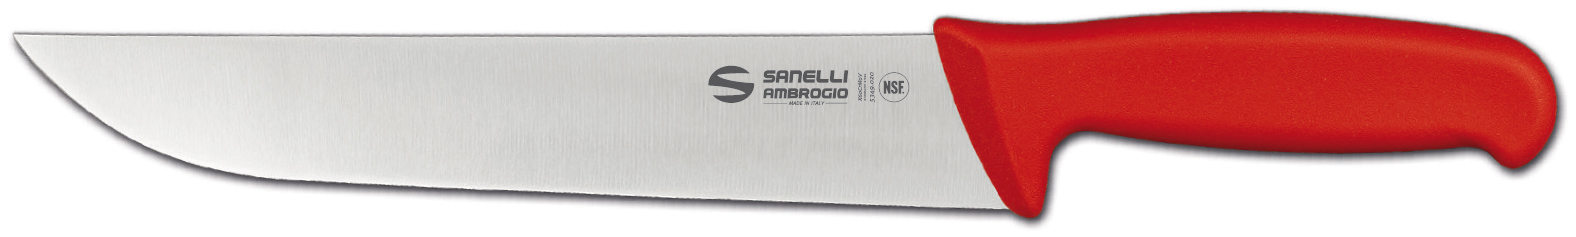 S309.024R SUPRA BUTCHER KNIFE RED HANDLE 24CM LAMA SANELLI AMBROGIO